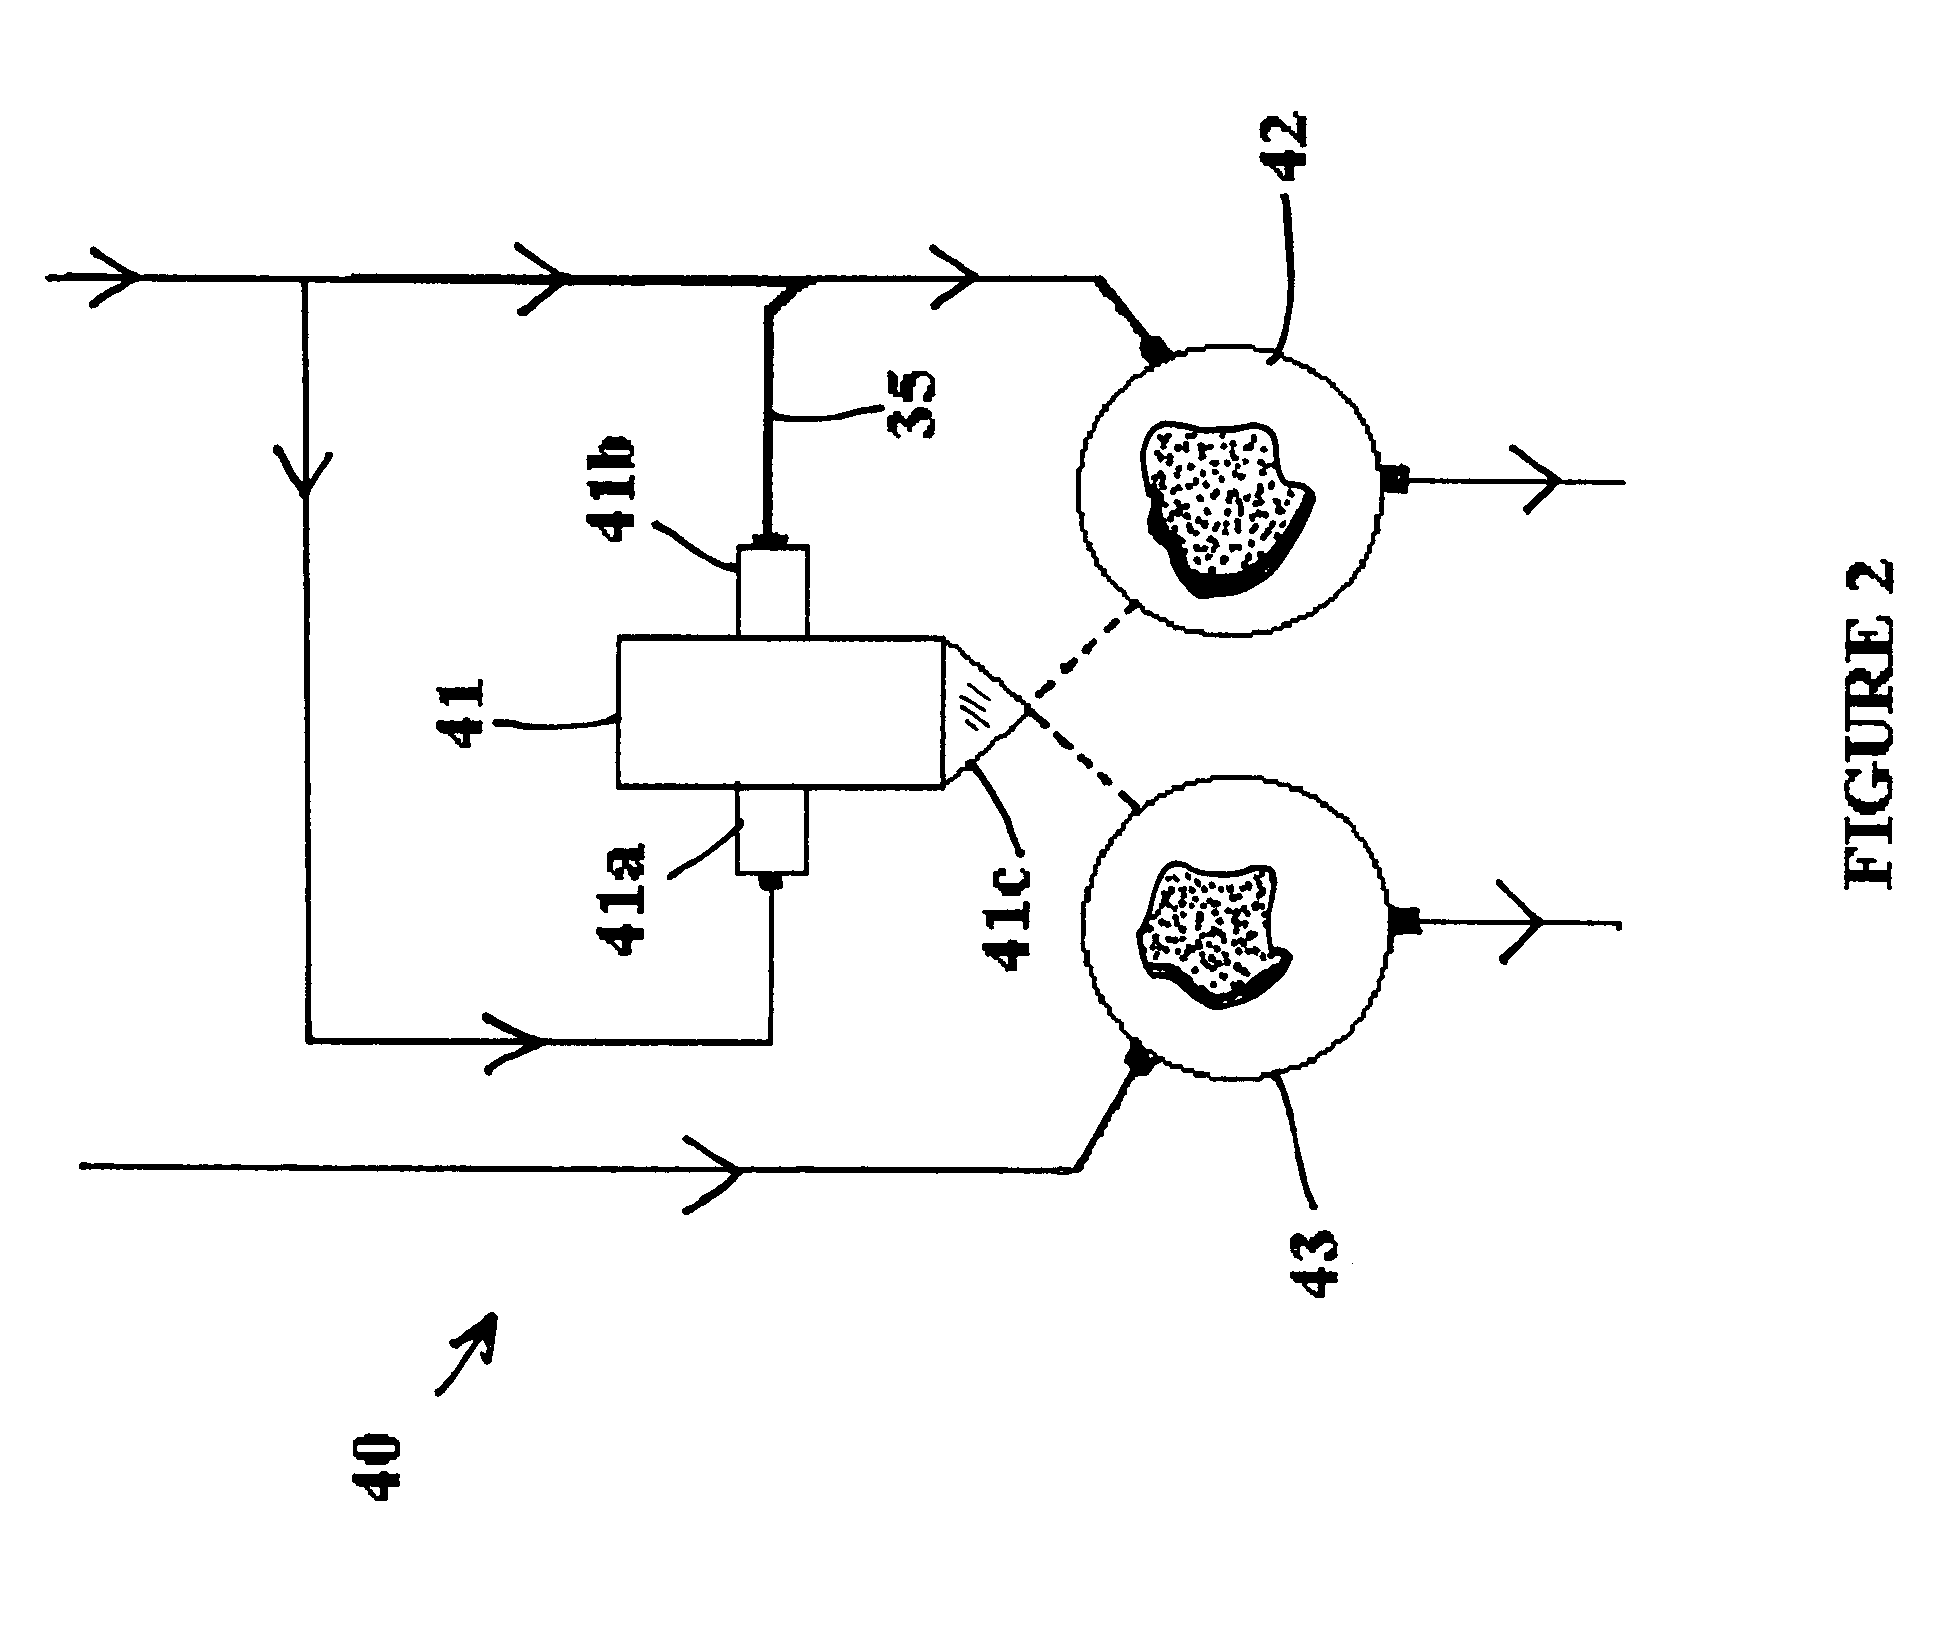 Flue gas conversion apparatus and method